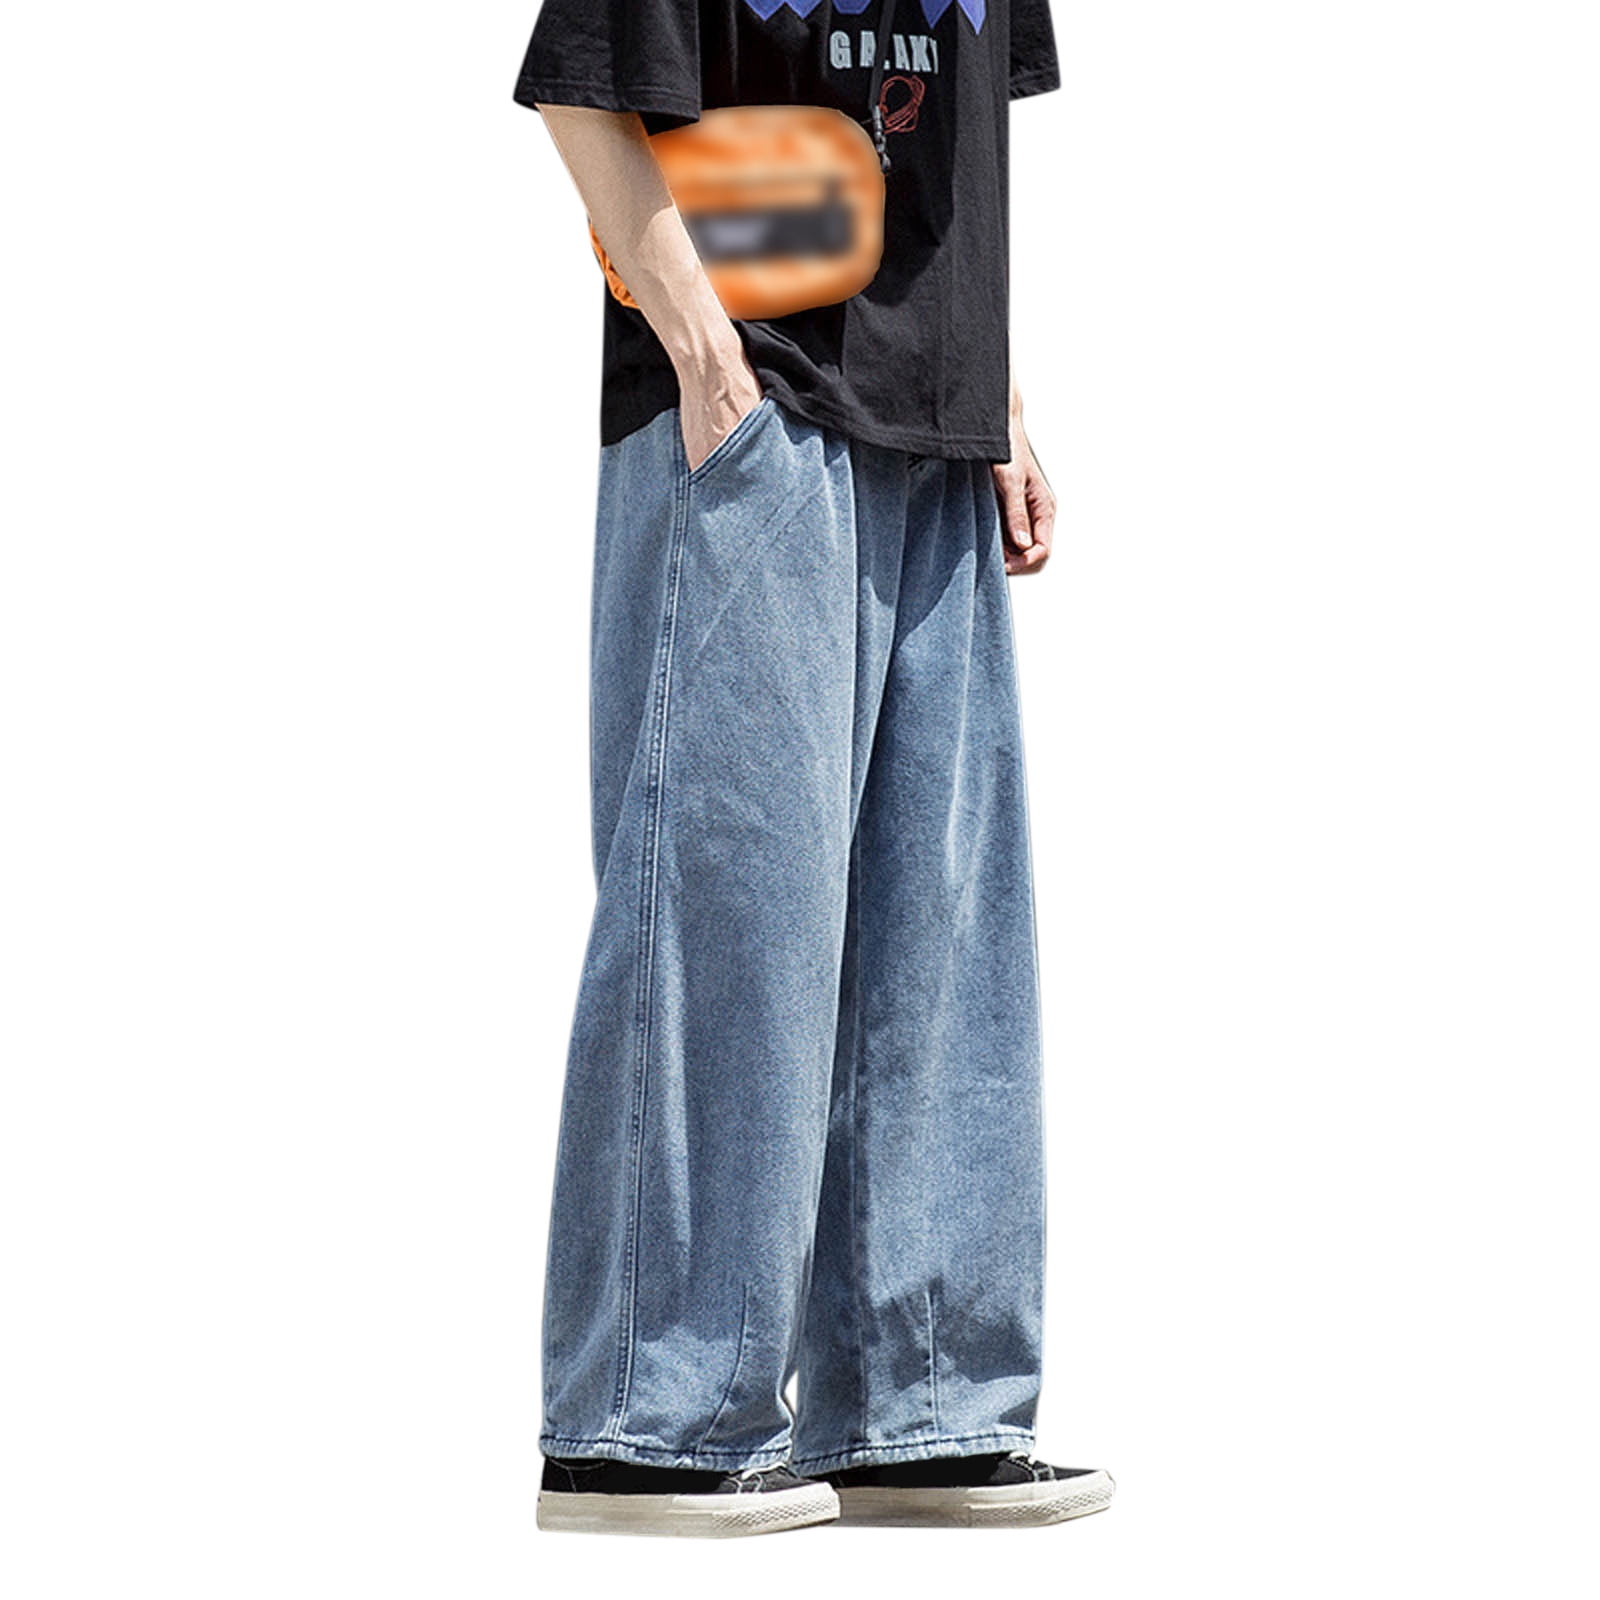 wofedyo baggy jeans Men Fashion Plus Size Elastic Jeans Street Wide Leg Trousers Pants jeans for men - Walmart.com